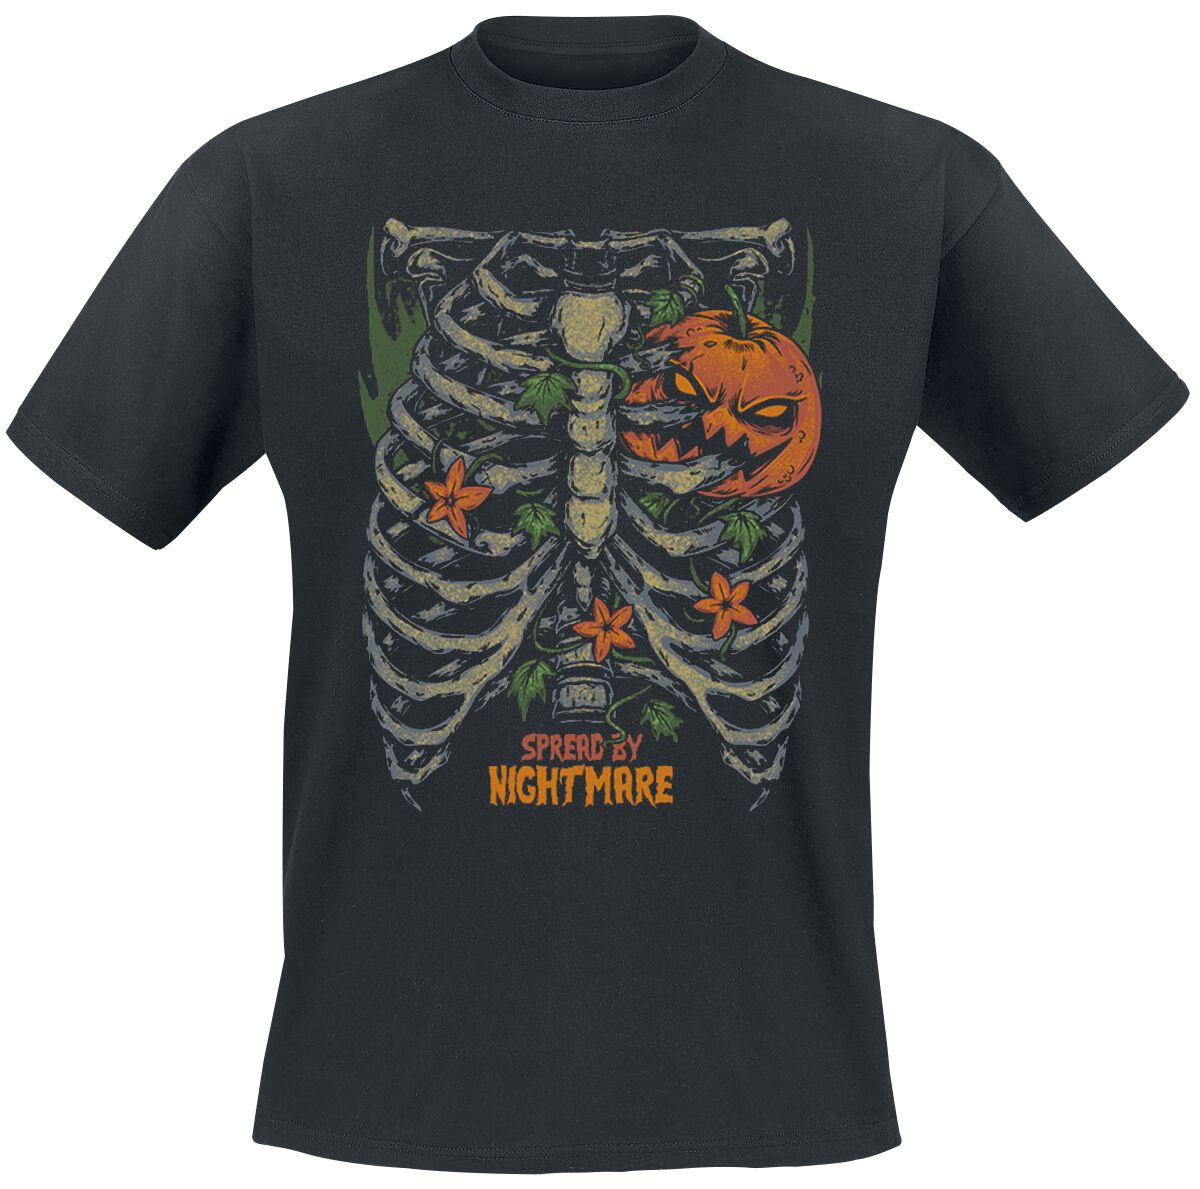 Halloween Spread By Nightmare T-Shirt black